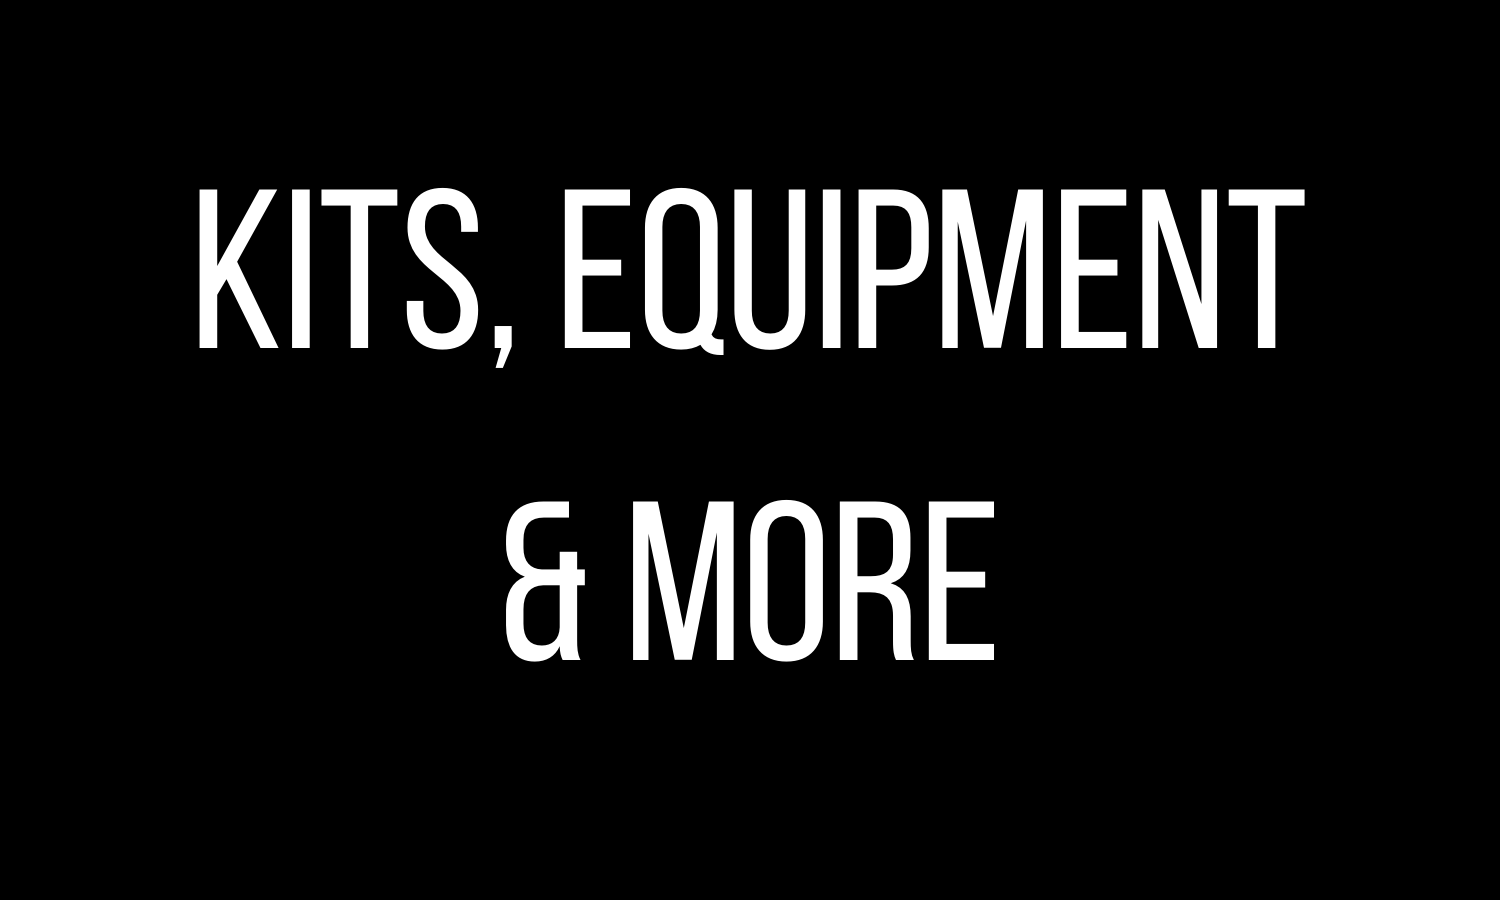 Kits, Equipment & More